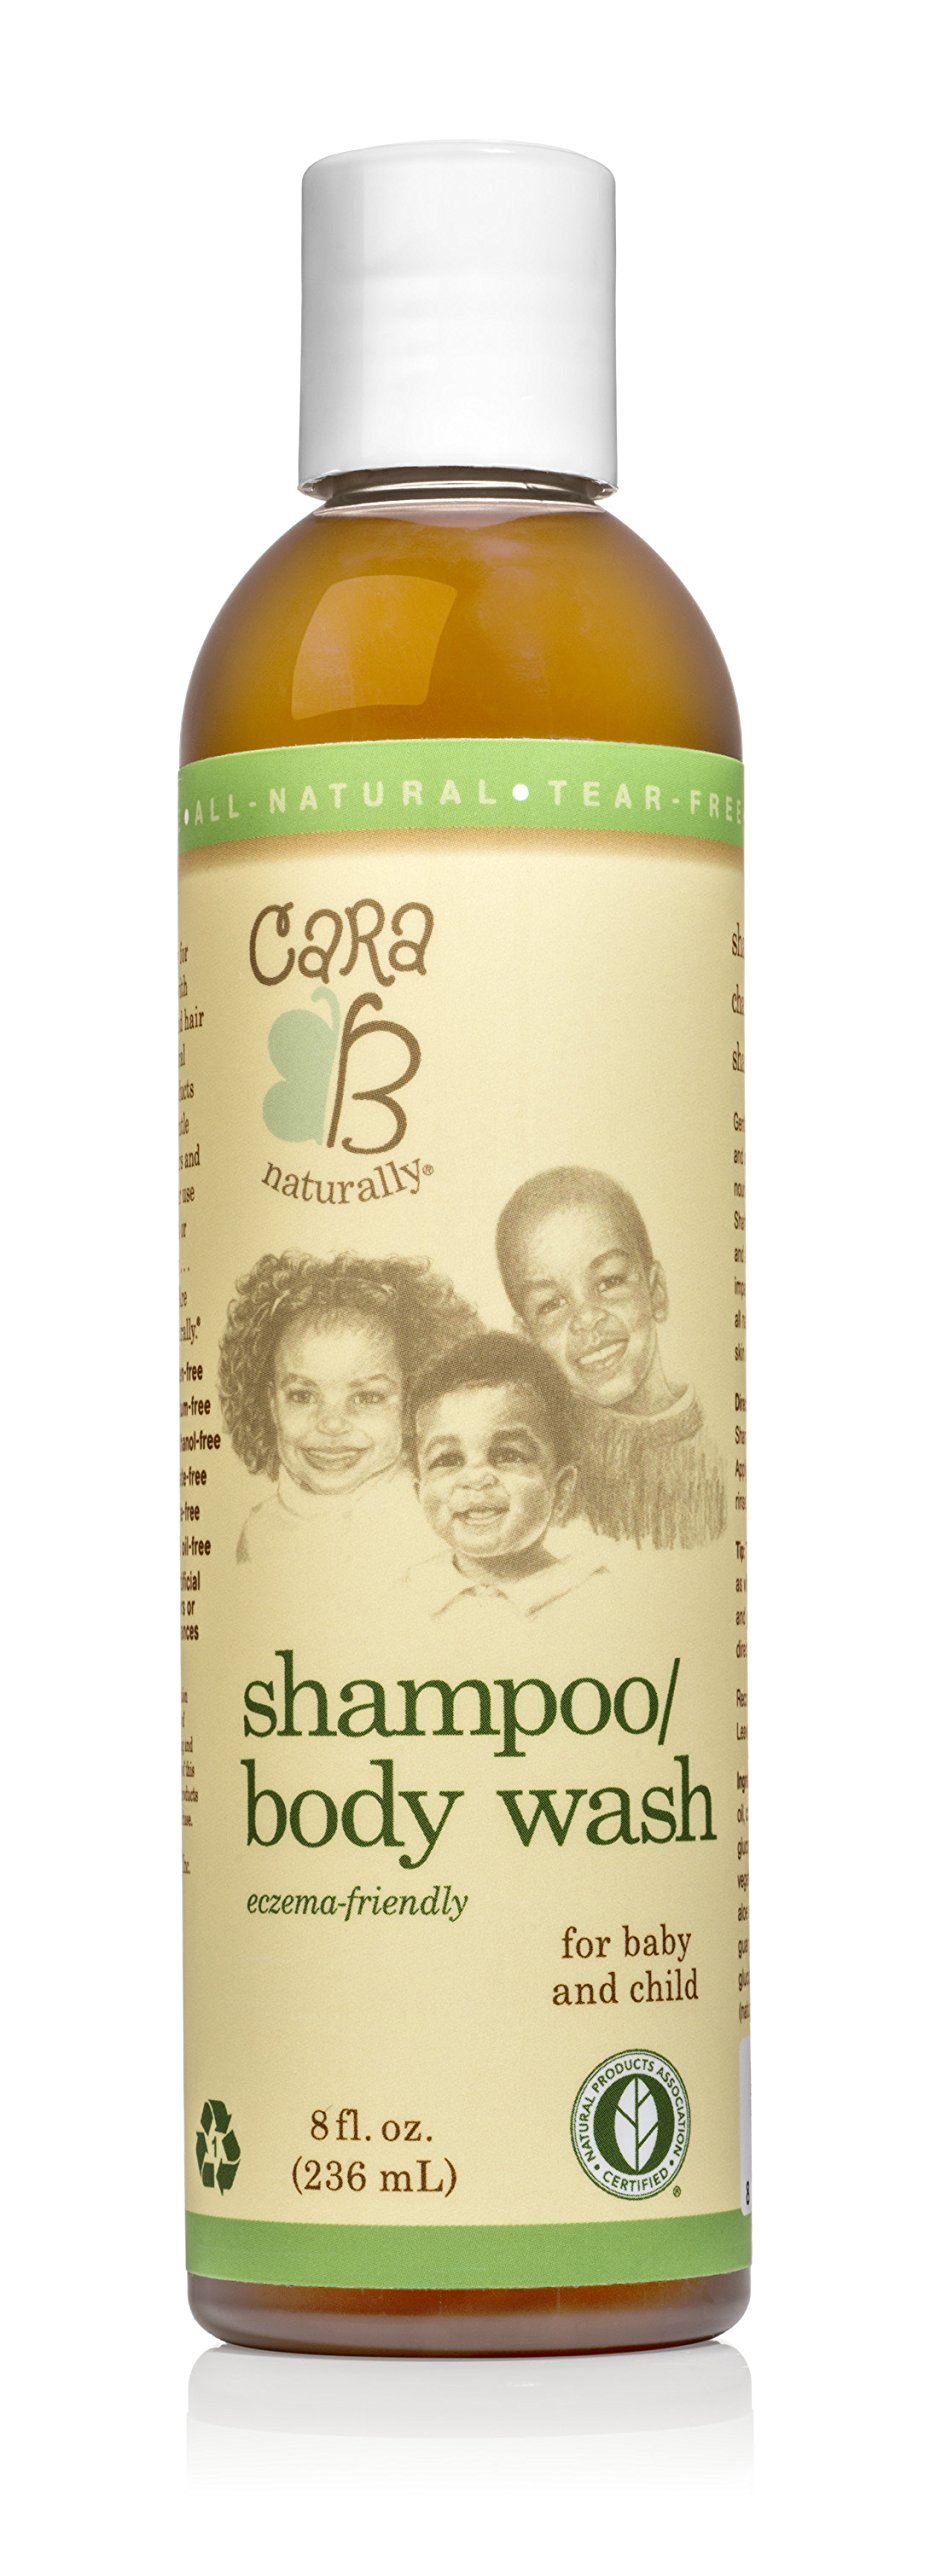 CARA B Naturally Baby Shampoo and Body Wash for Textured, Curly Hair - Eczema-Friendly Formula – No Parabens, Sulfates, Phthalates - 8 Ounces